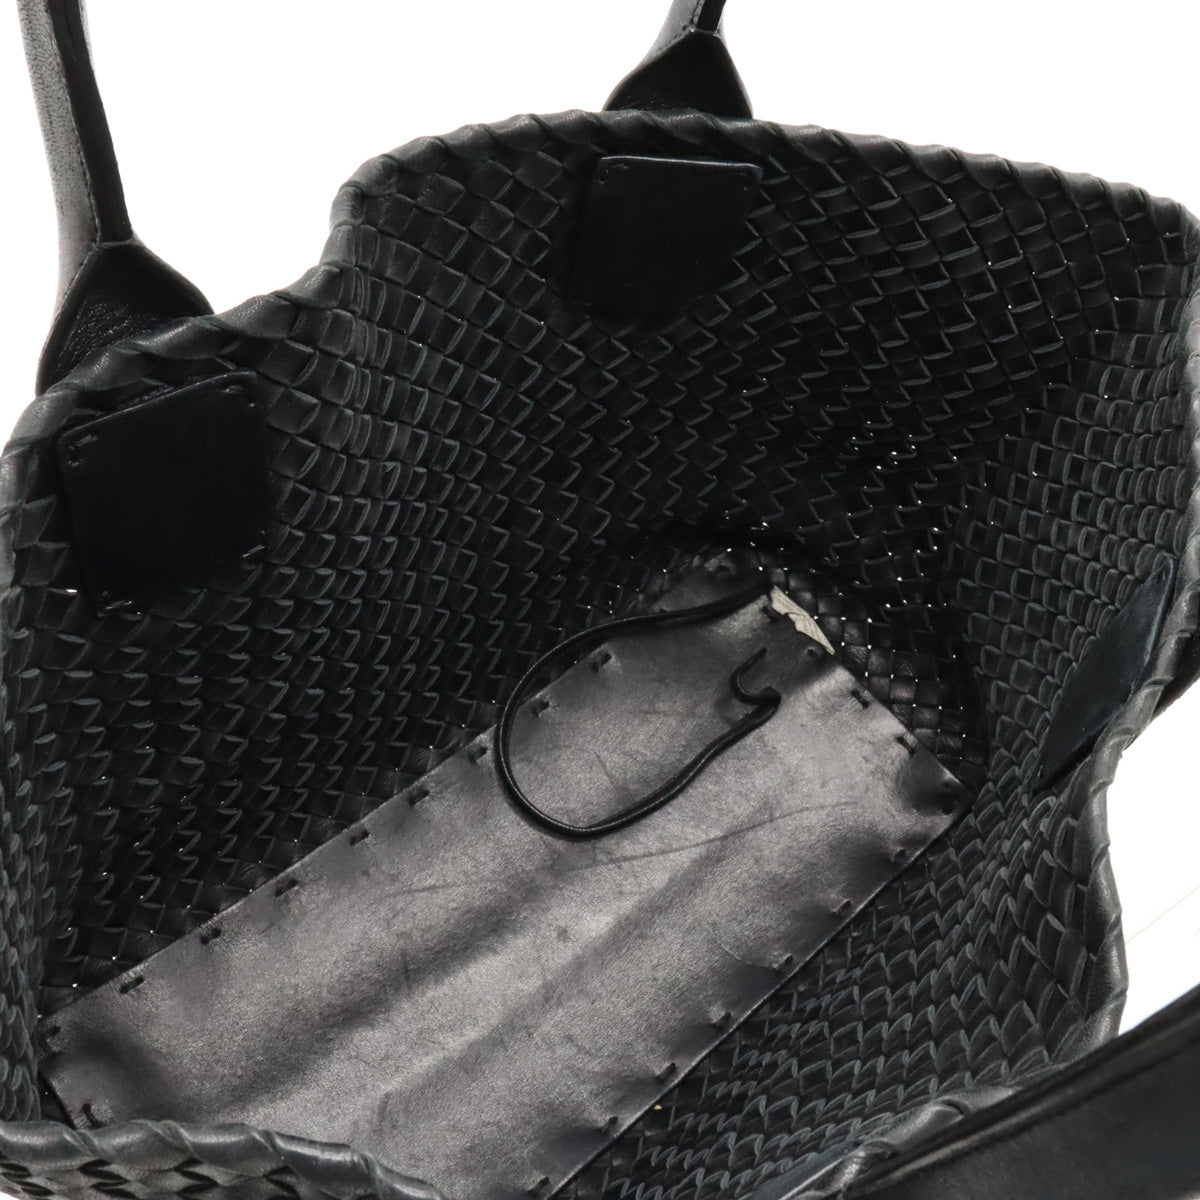 BOTTEGA VENETA BOTTEGA VENETA VENETA INTRACT COVER P.M. Tote Bag Shoulder Bag Leather  Black Pochette Limited 250 Earringss 141498 BLUMIN BLUMIN